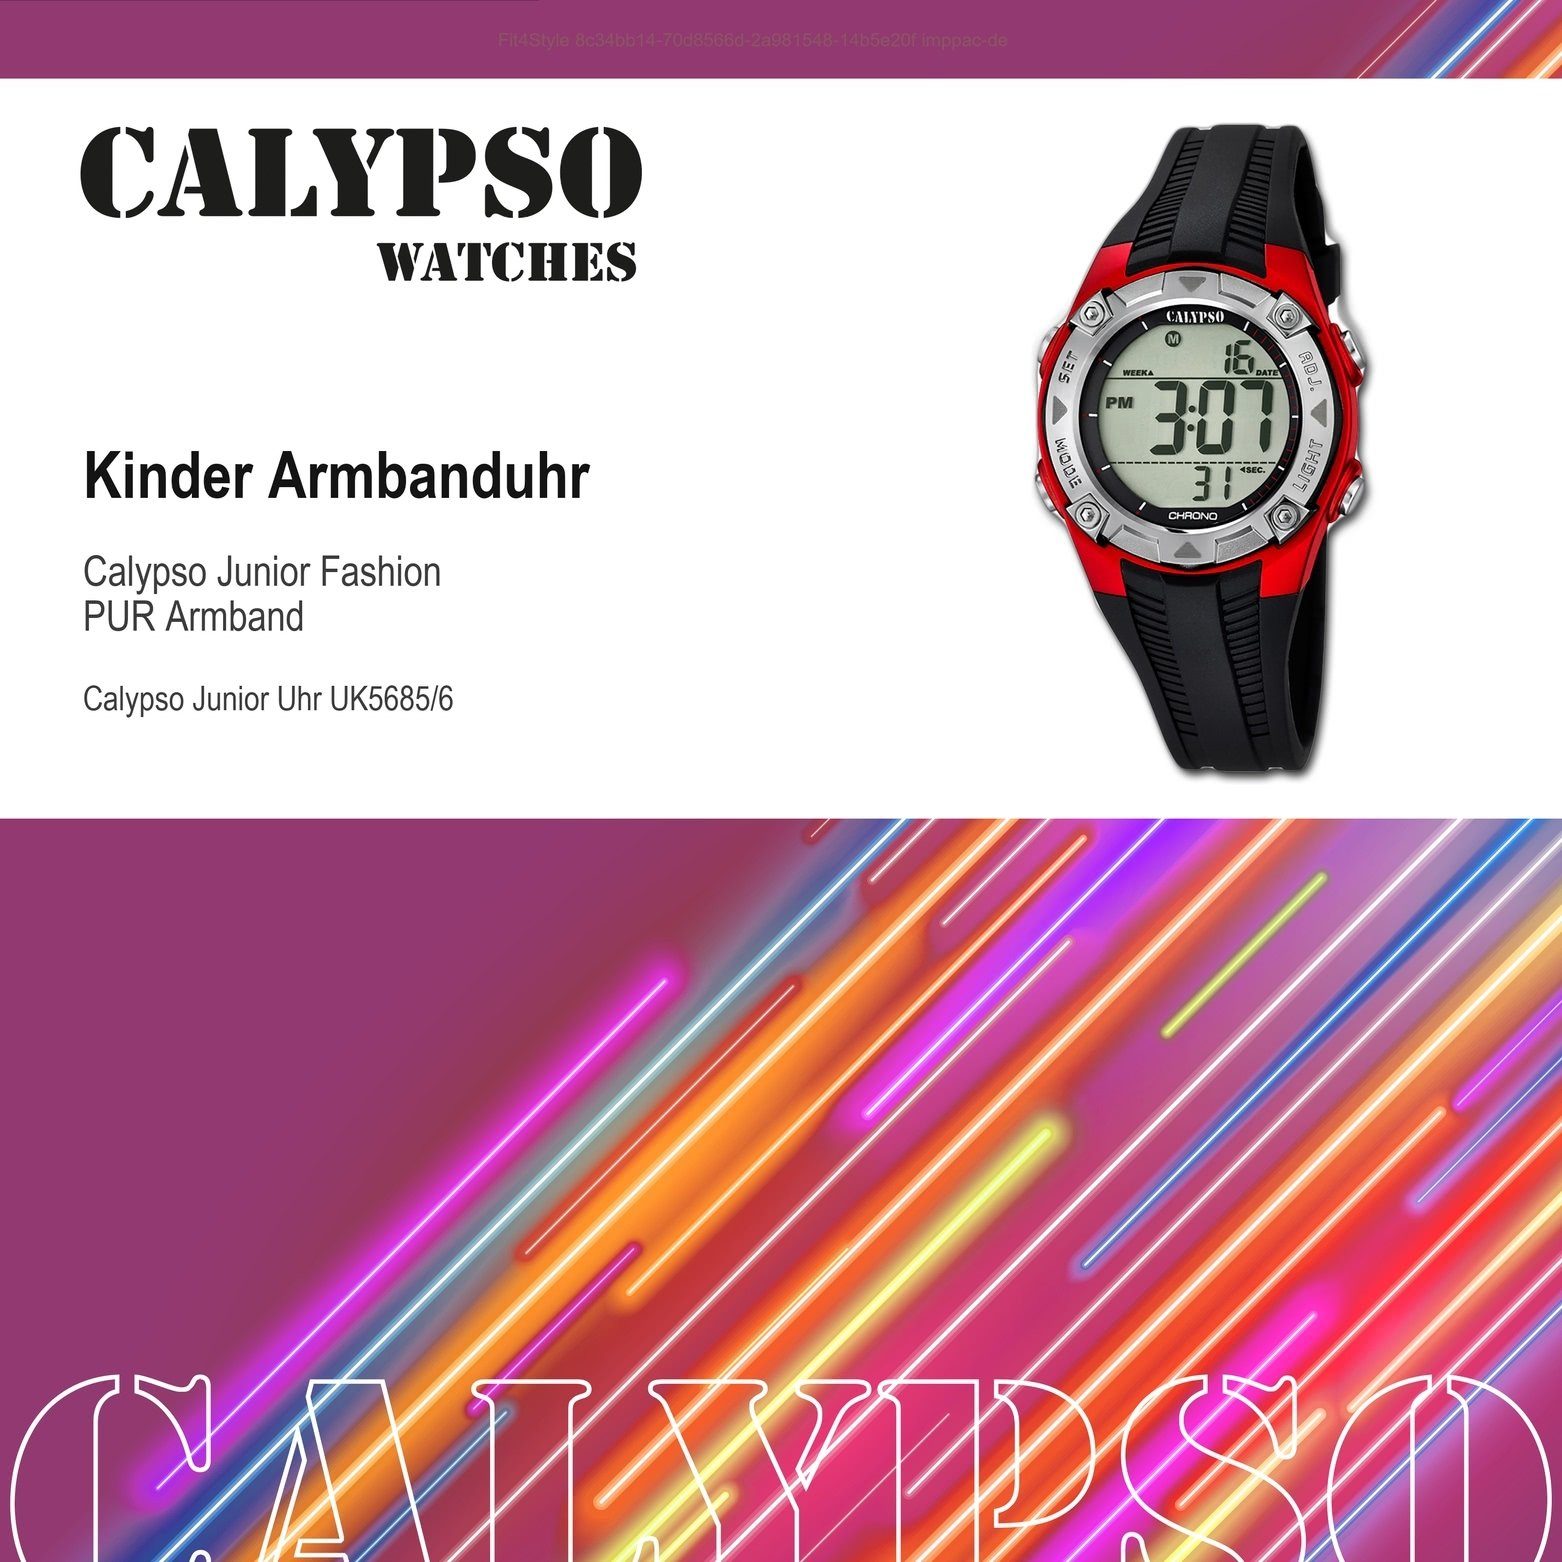 CALYPSO WATCHES rund, Digitaluhr Kinder PURarmband Fashion Uhr Kunststoffband, schwarz, K5685/6 Armbanduhr Calypso Kinder